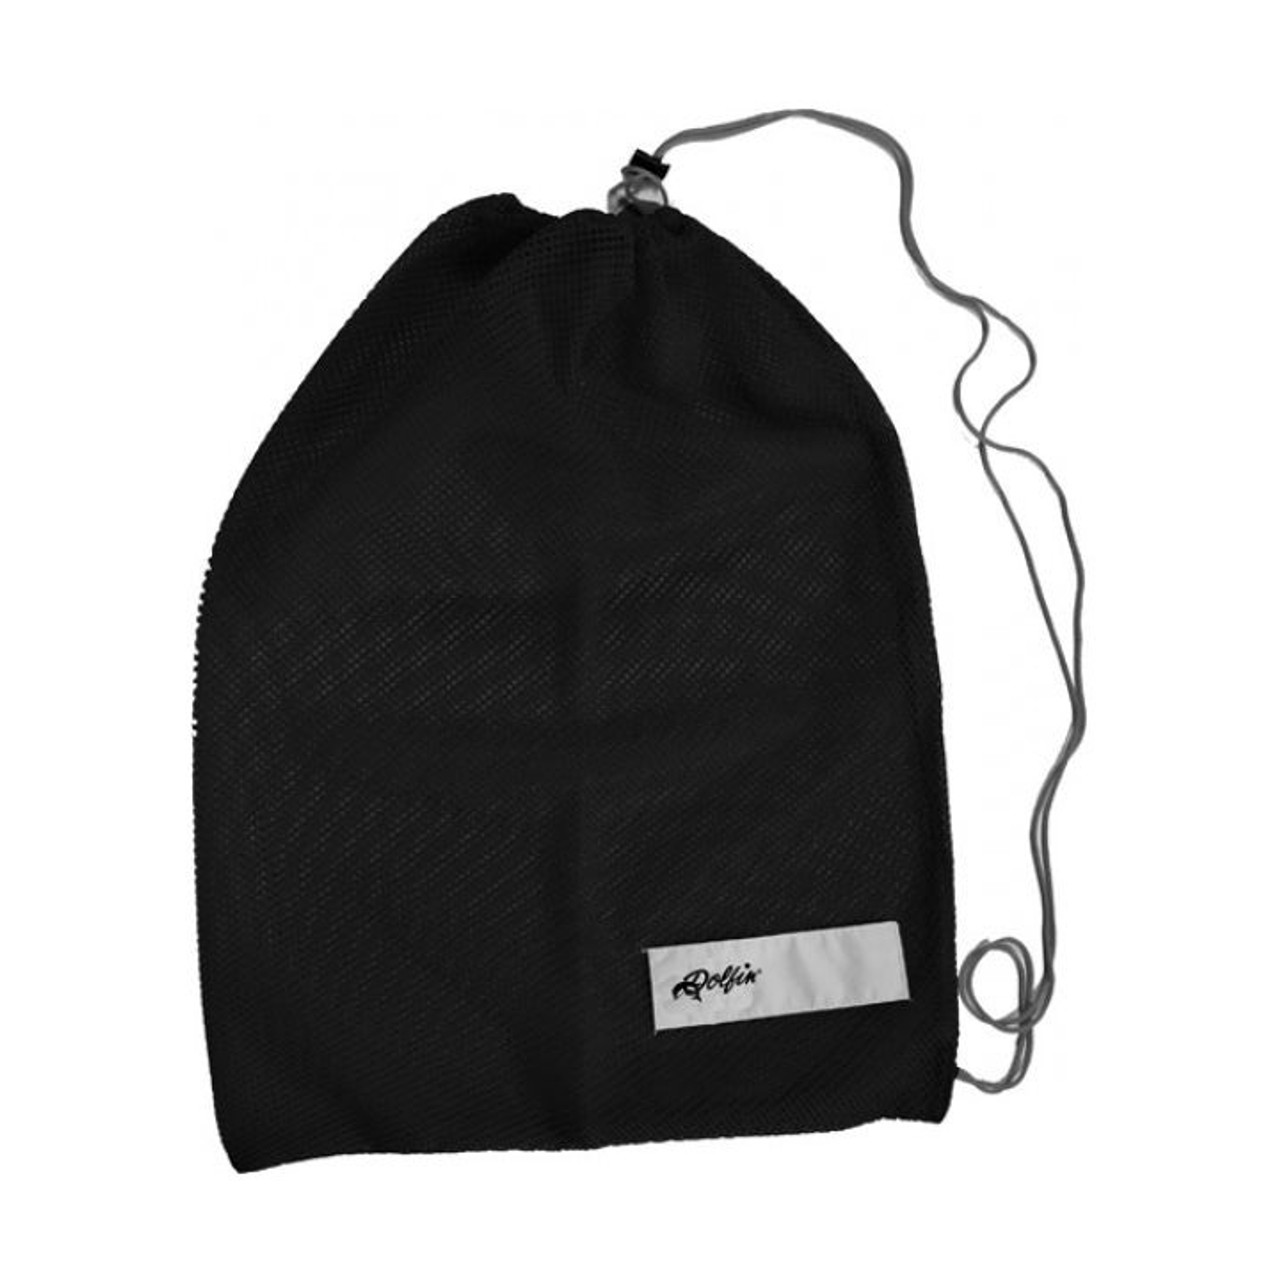 Dolfin® Mesh Equipment Bag - Black - One Size